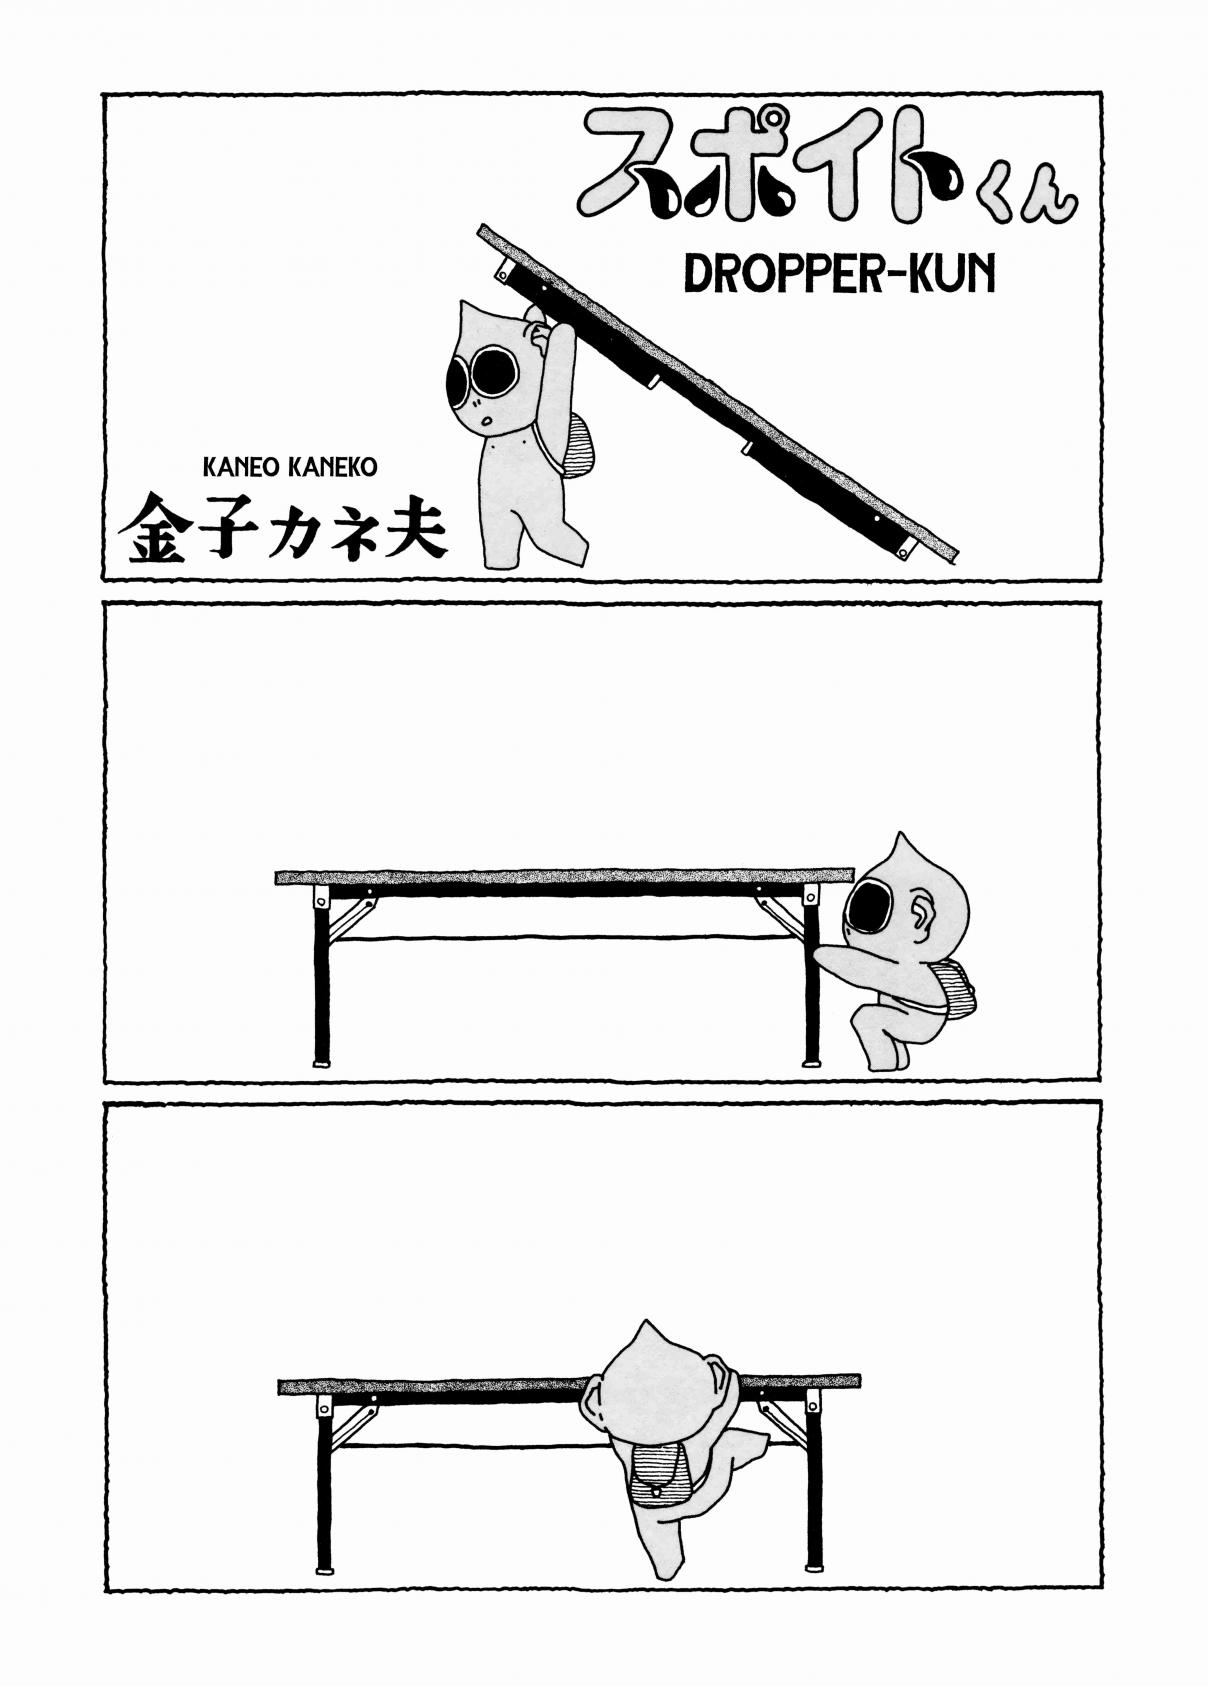 Dropper-kun